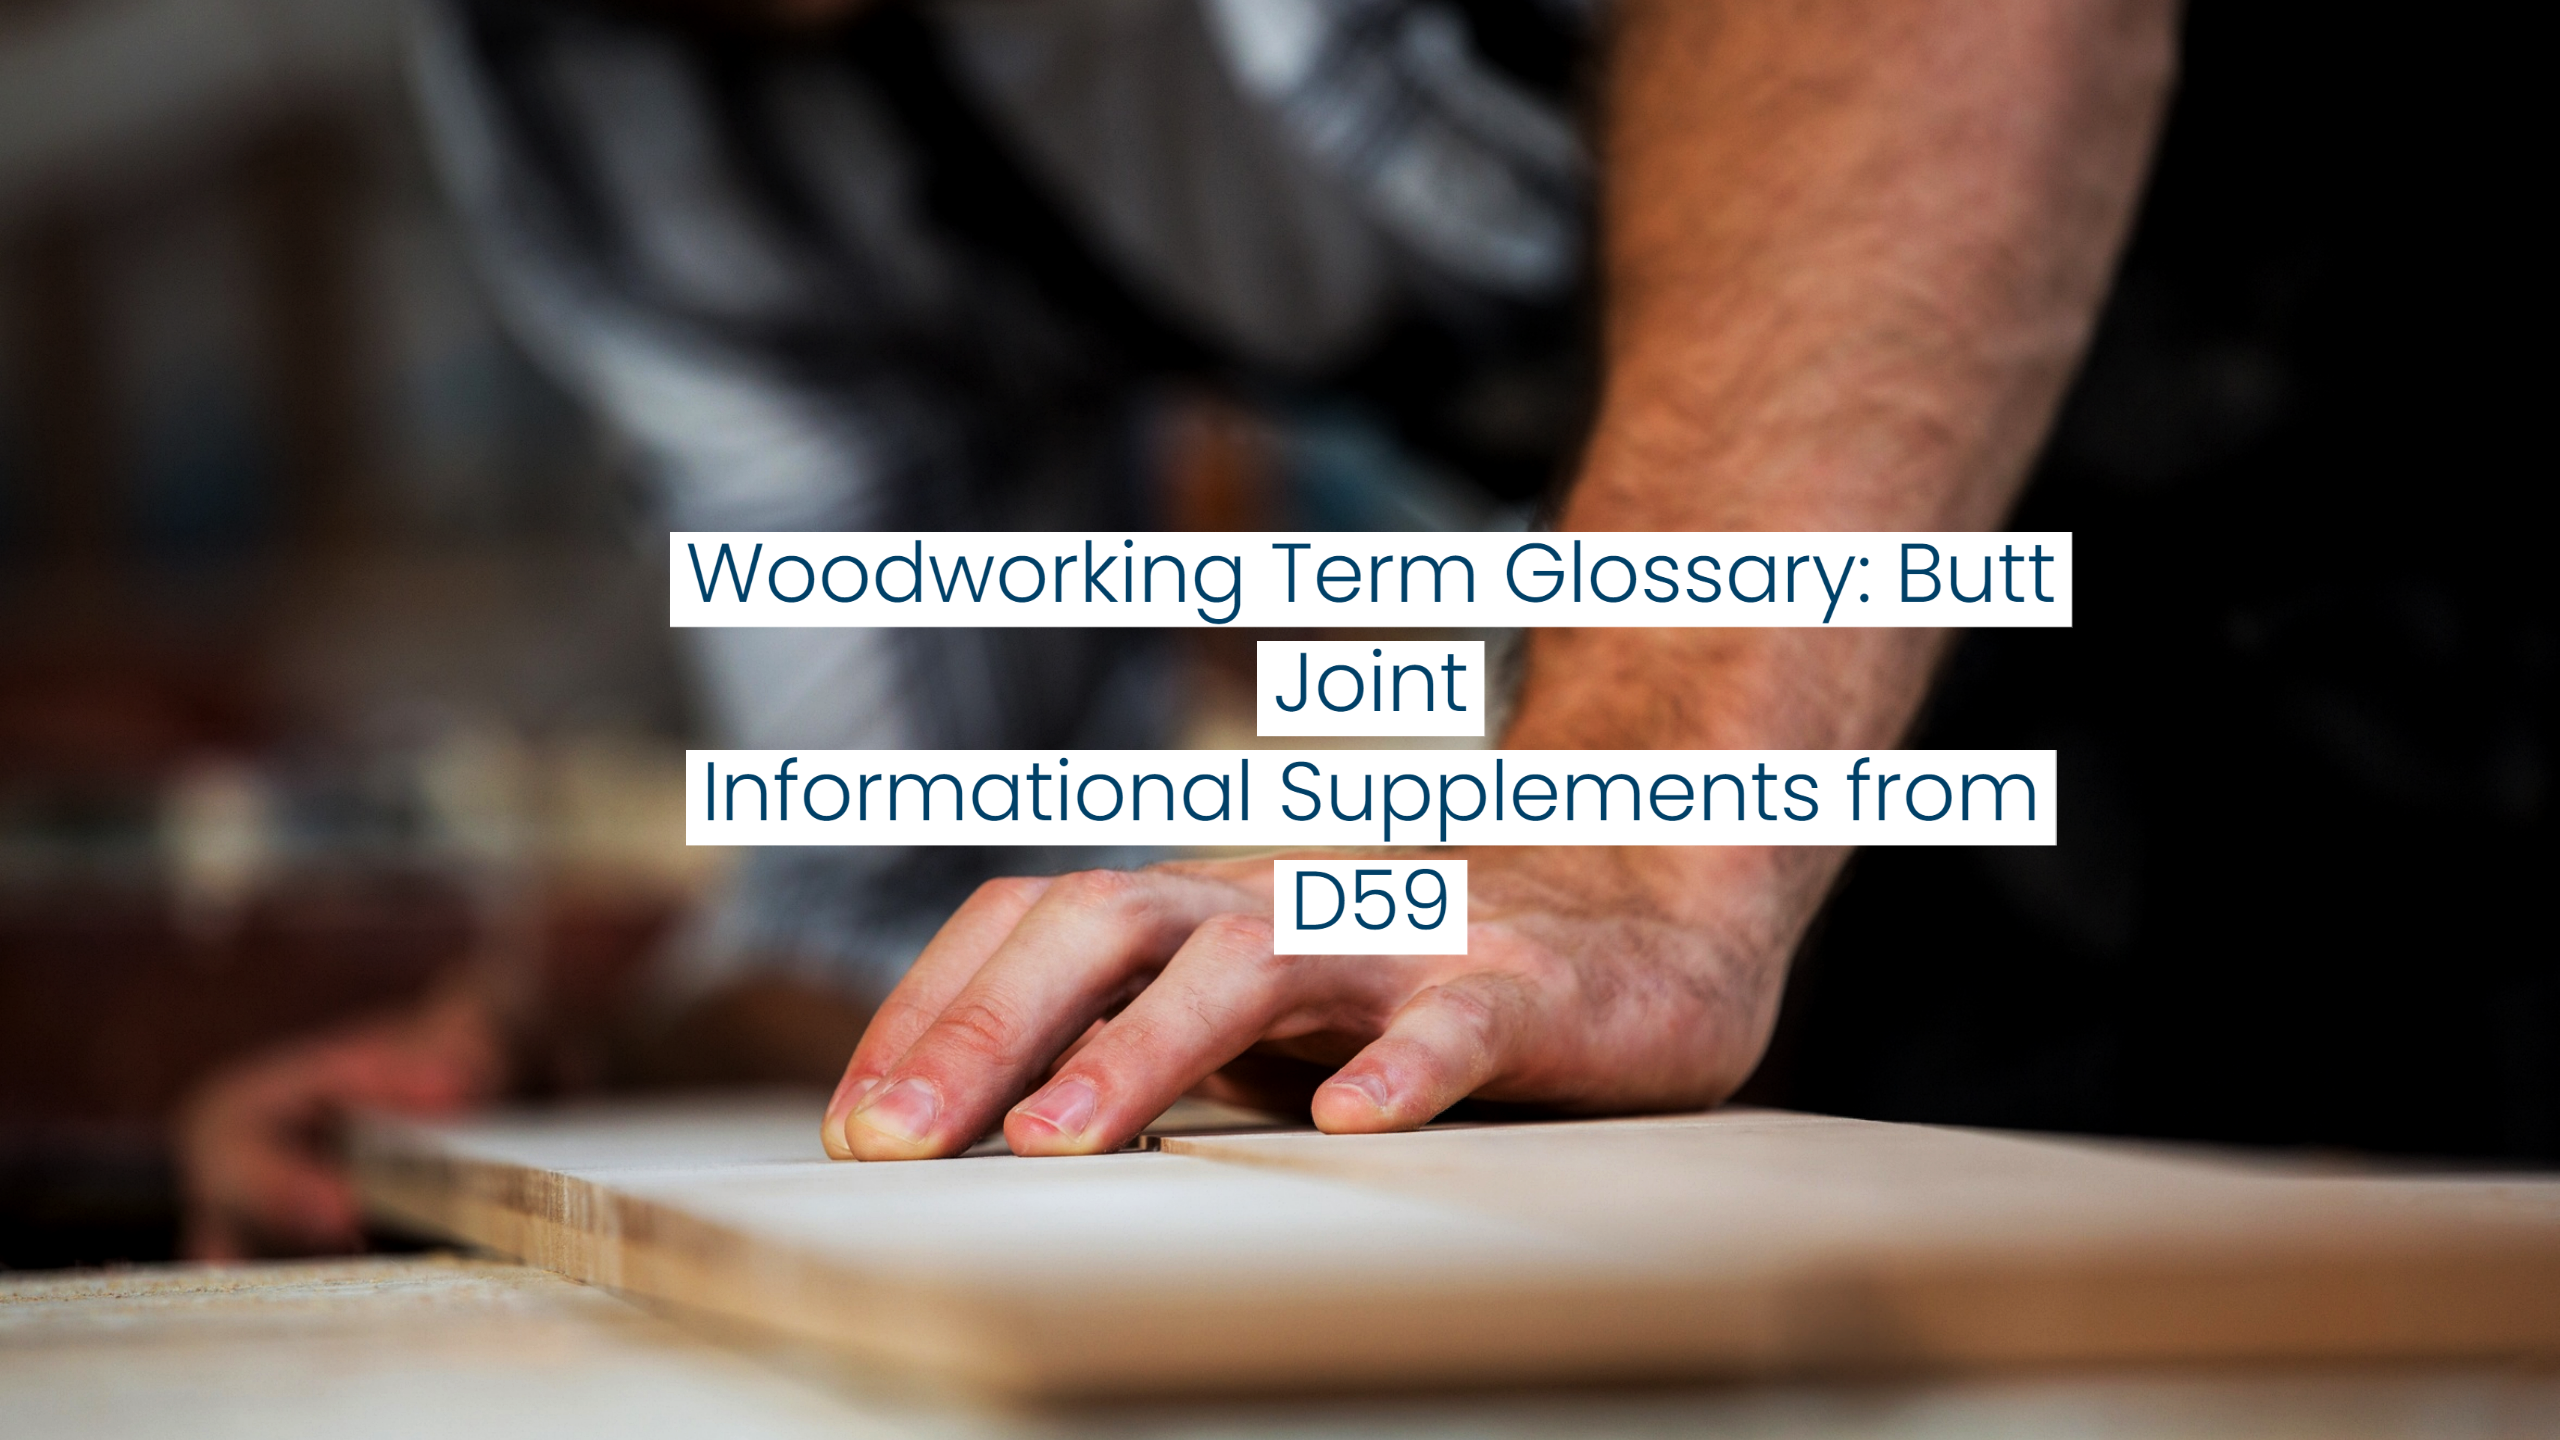 Biscuit Joiner Basics  Woodworking Basics 